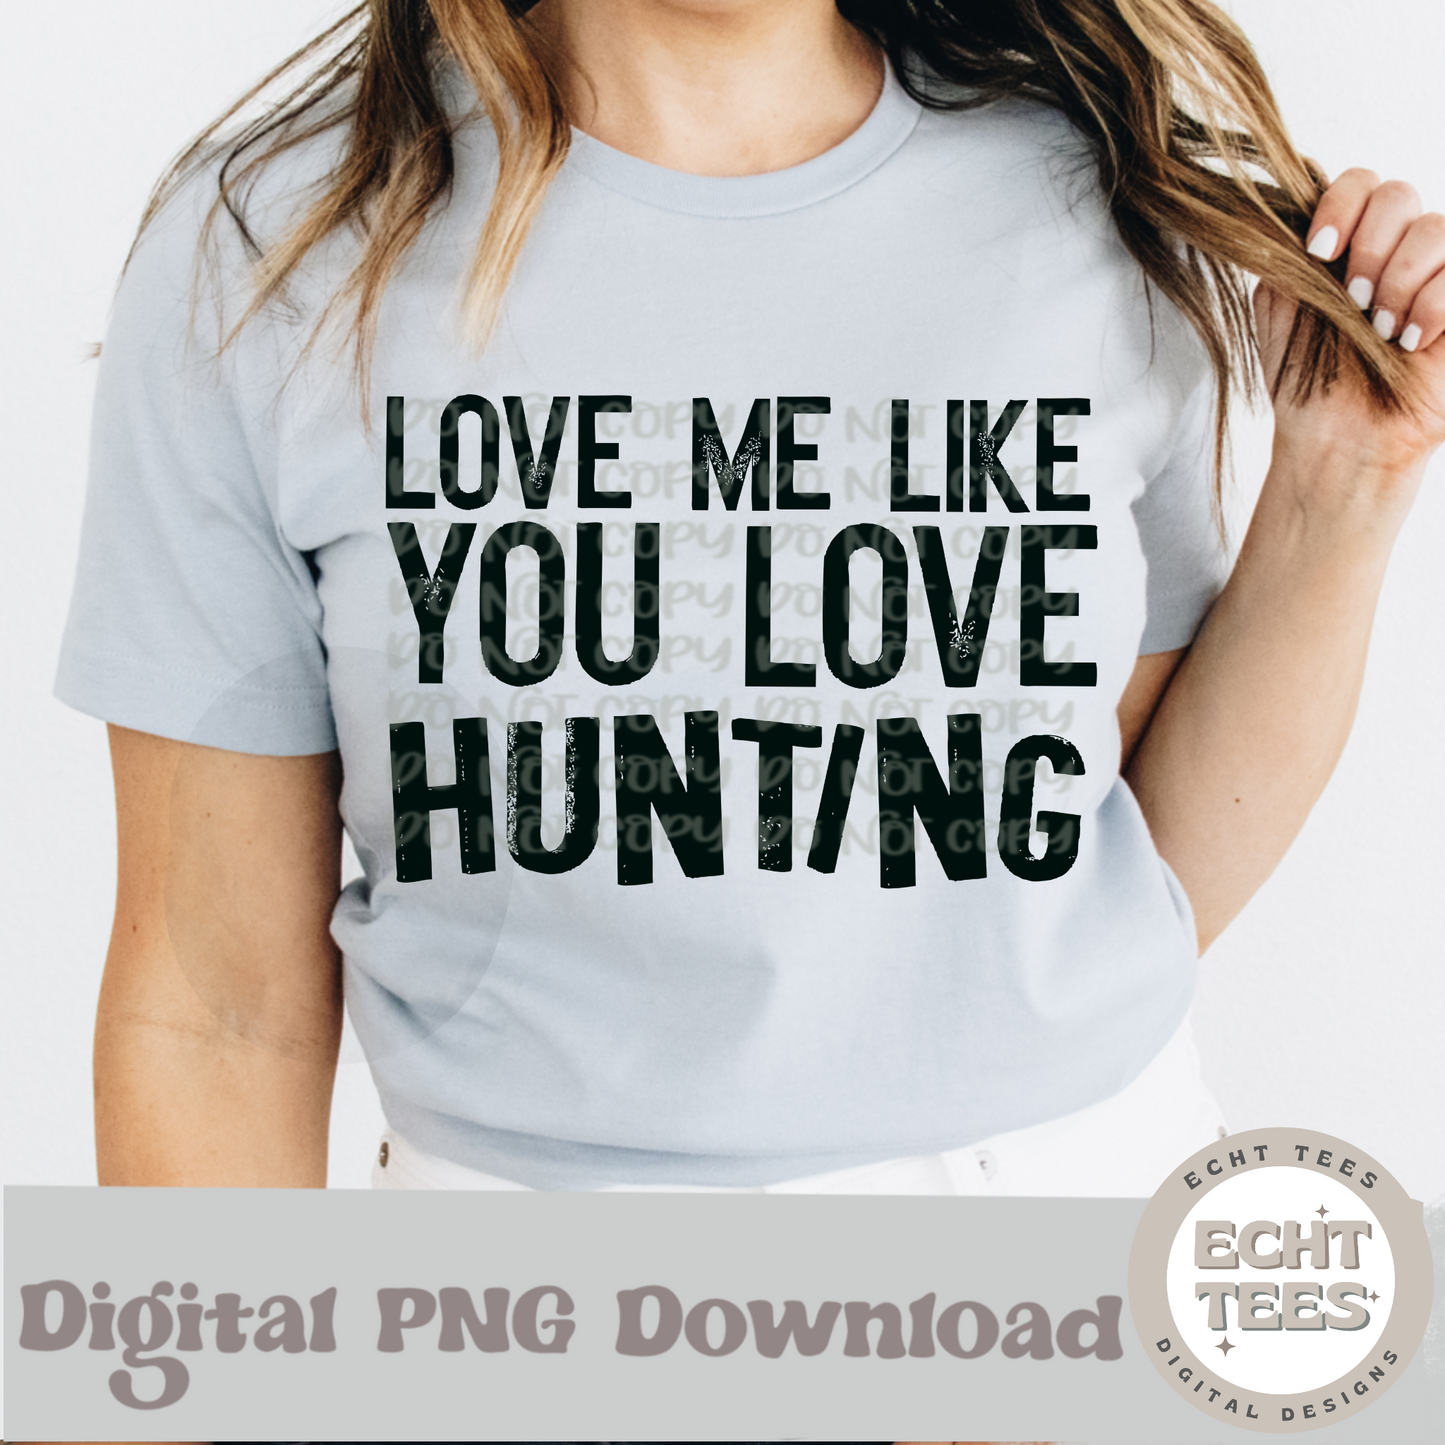 Love me like you love hunting PNG Digital Download